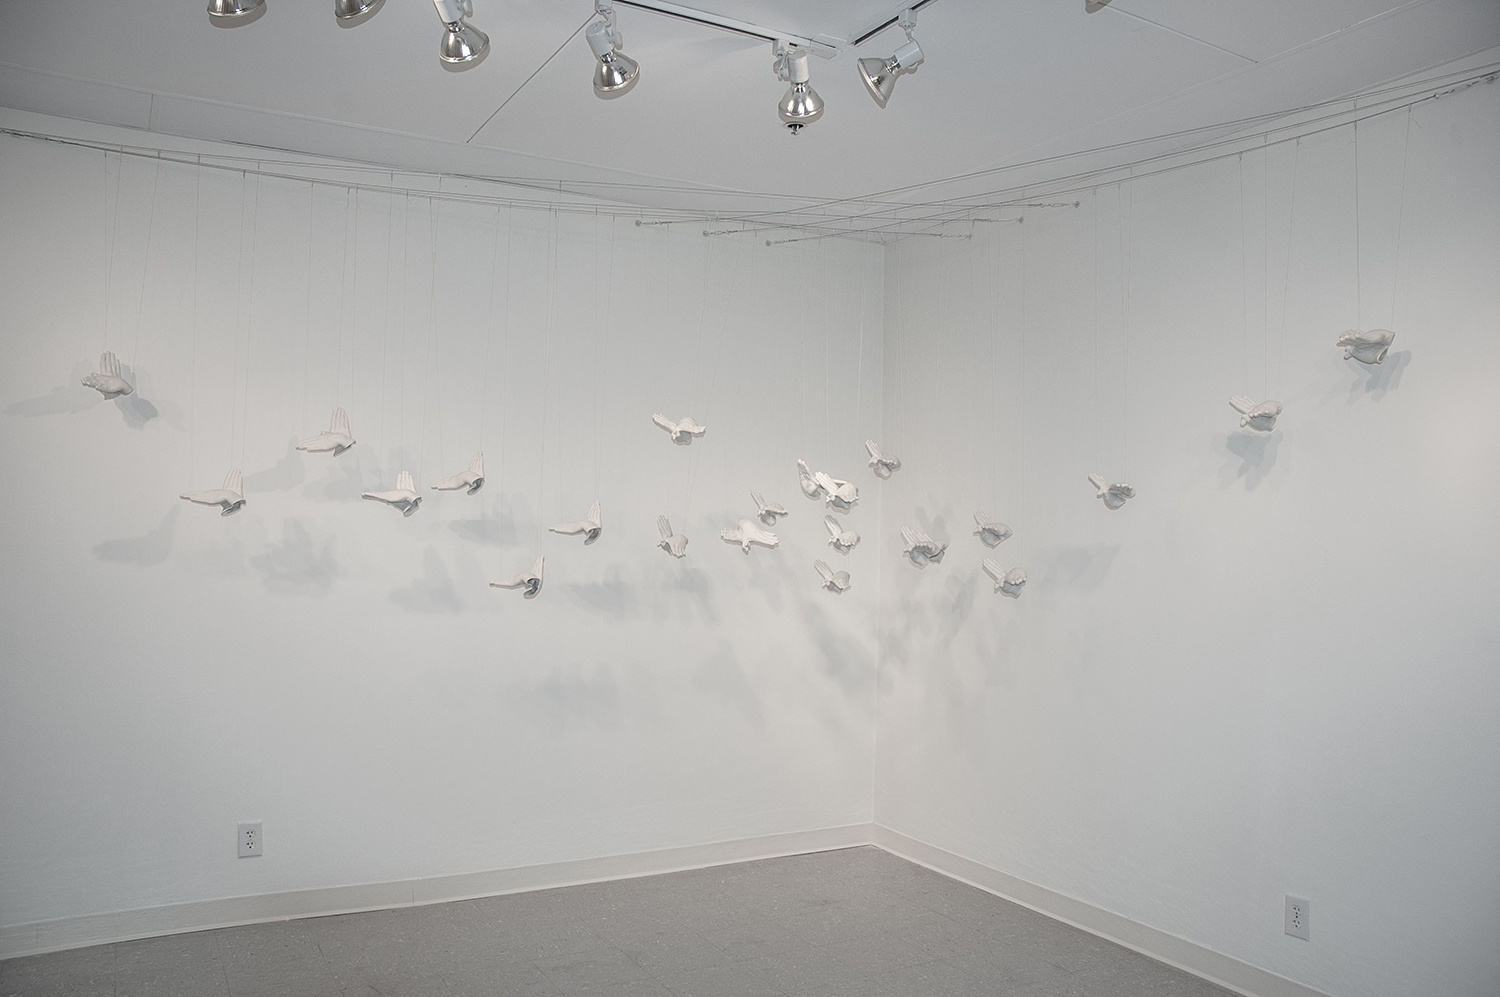 artwork of lots of hanging ceramic hands imitating birds flying